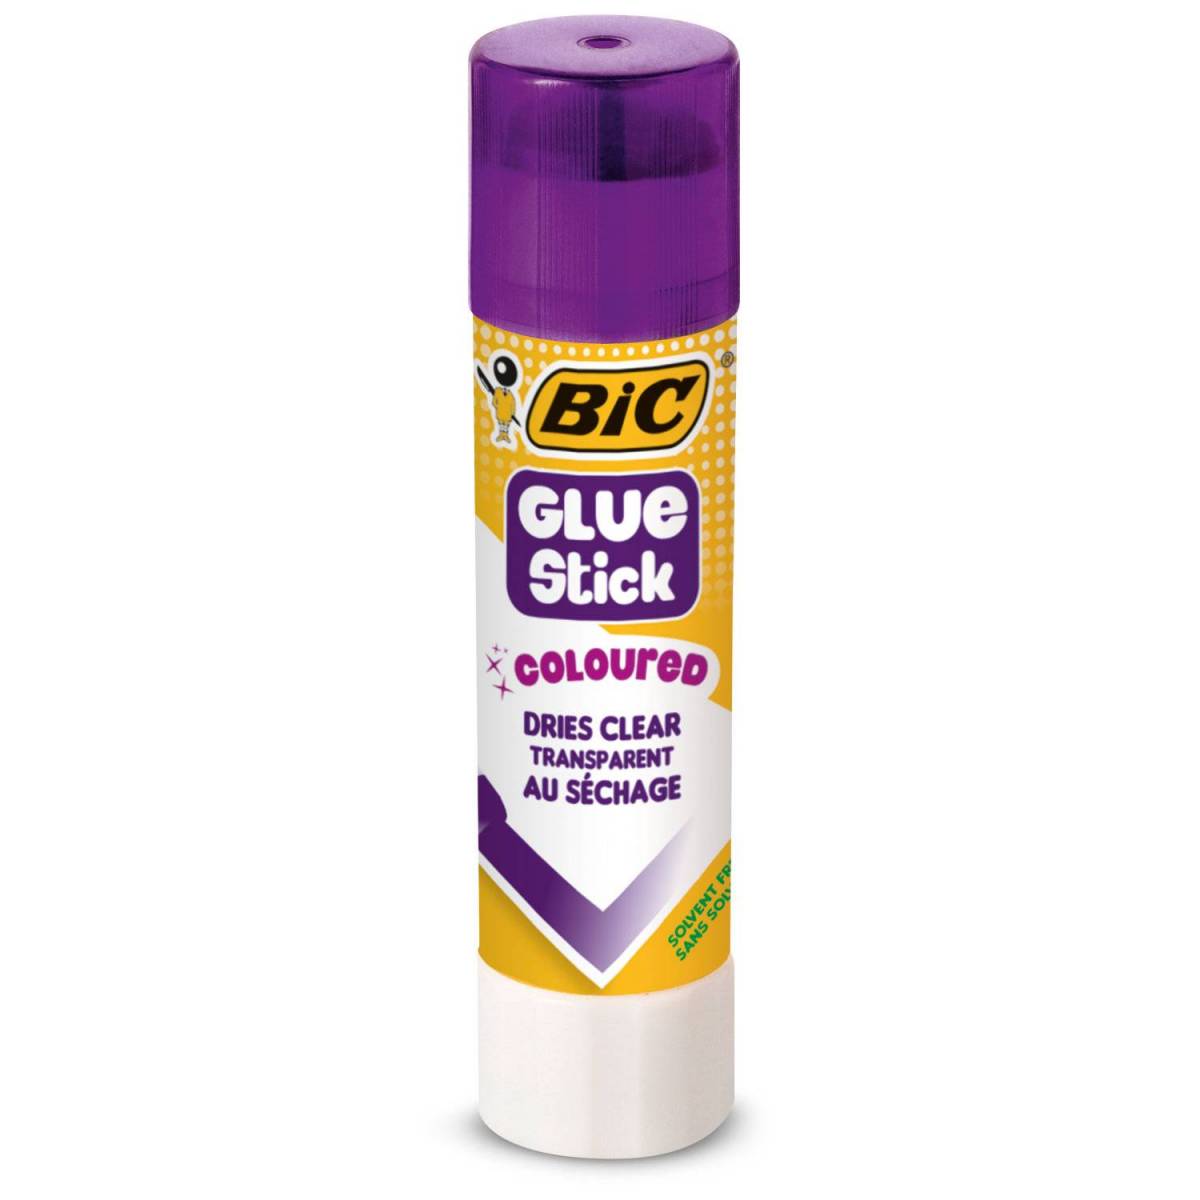 BIC - Stick de Colle Glue Stick Colorée